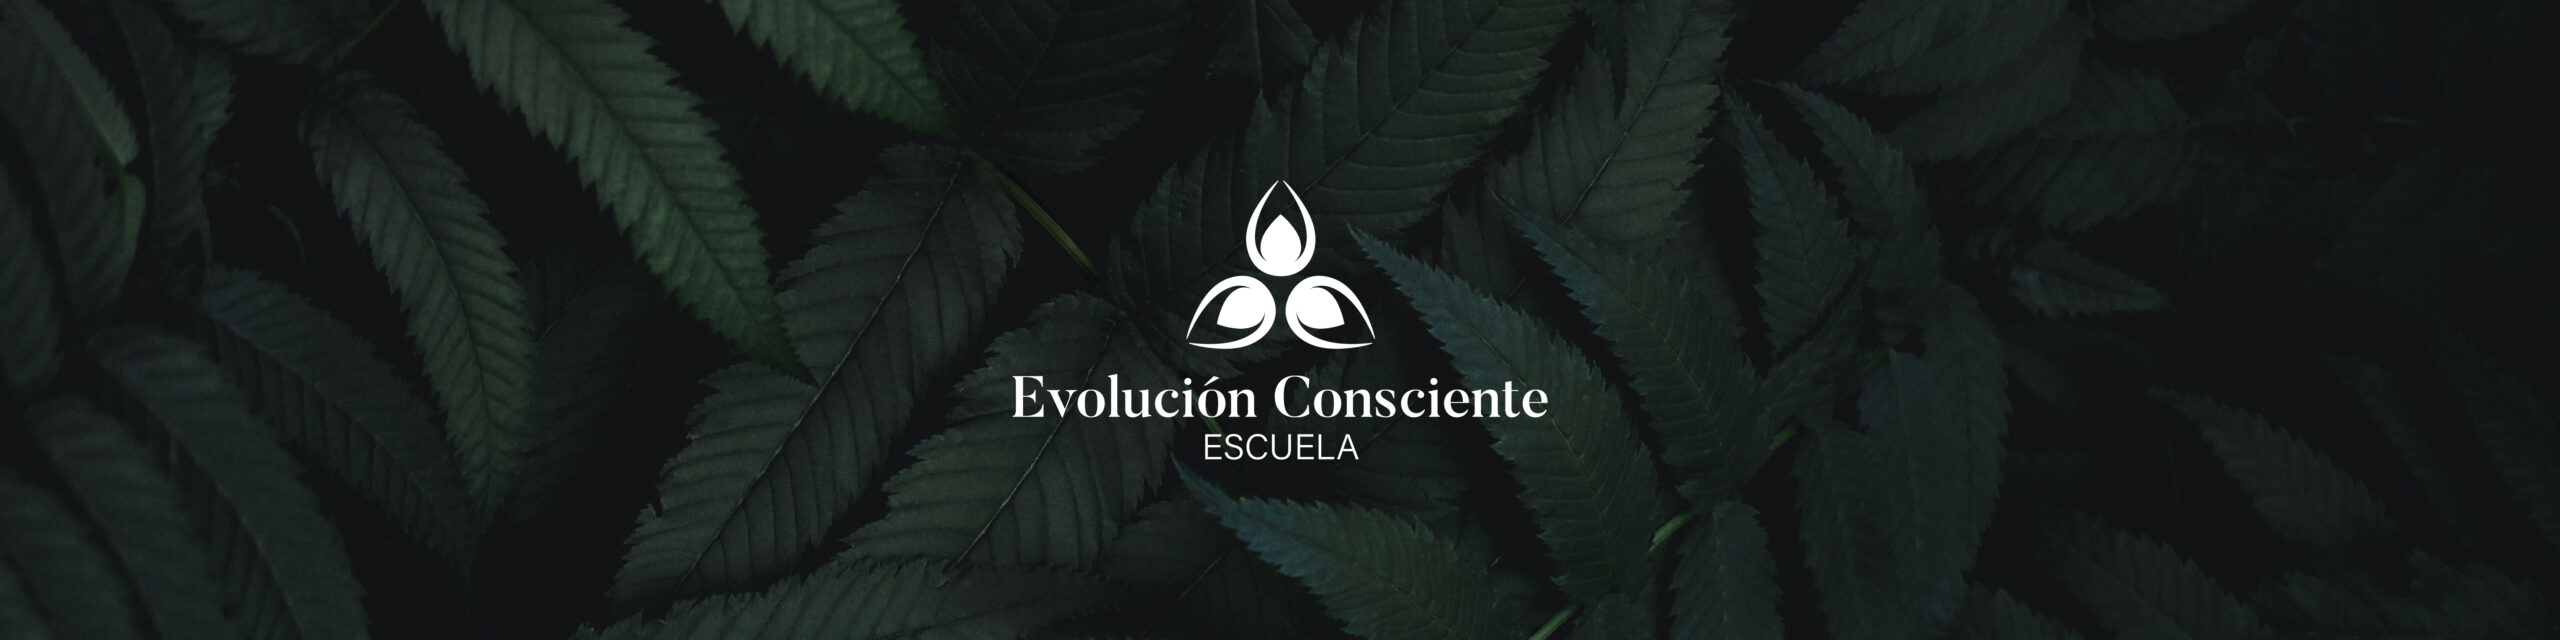 Banner Escuela Evolucion Consciente